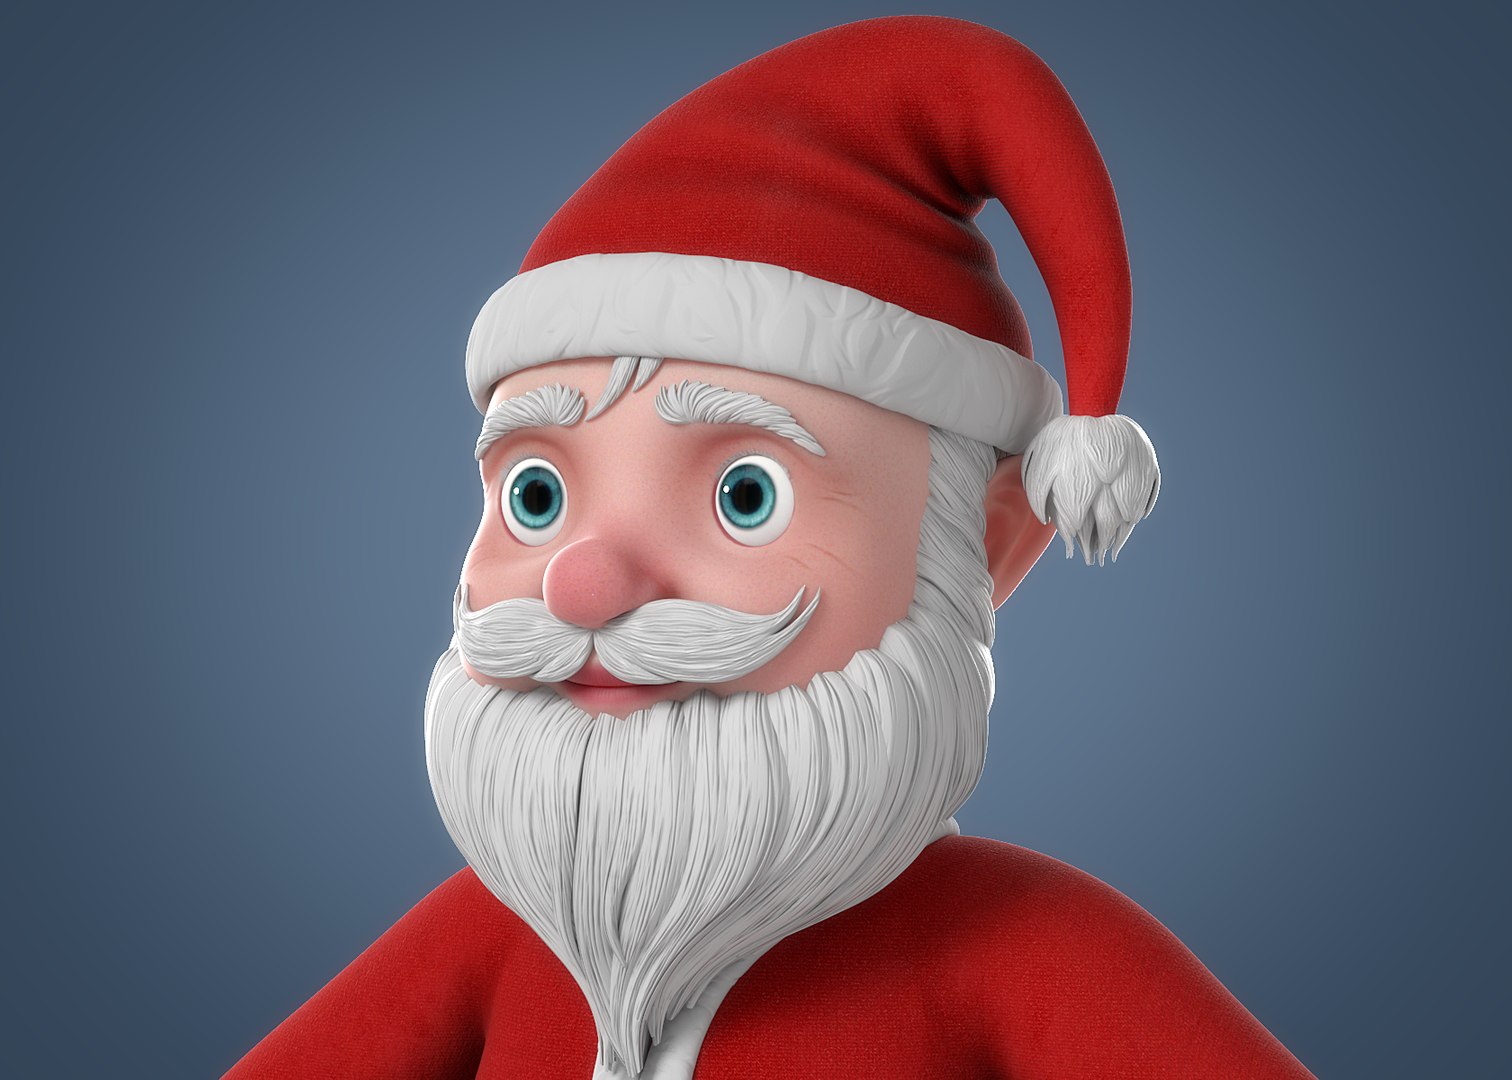 3d Cartoon Santa Claus Rigged Character Model Turbosquid 1337812 